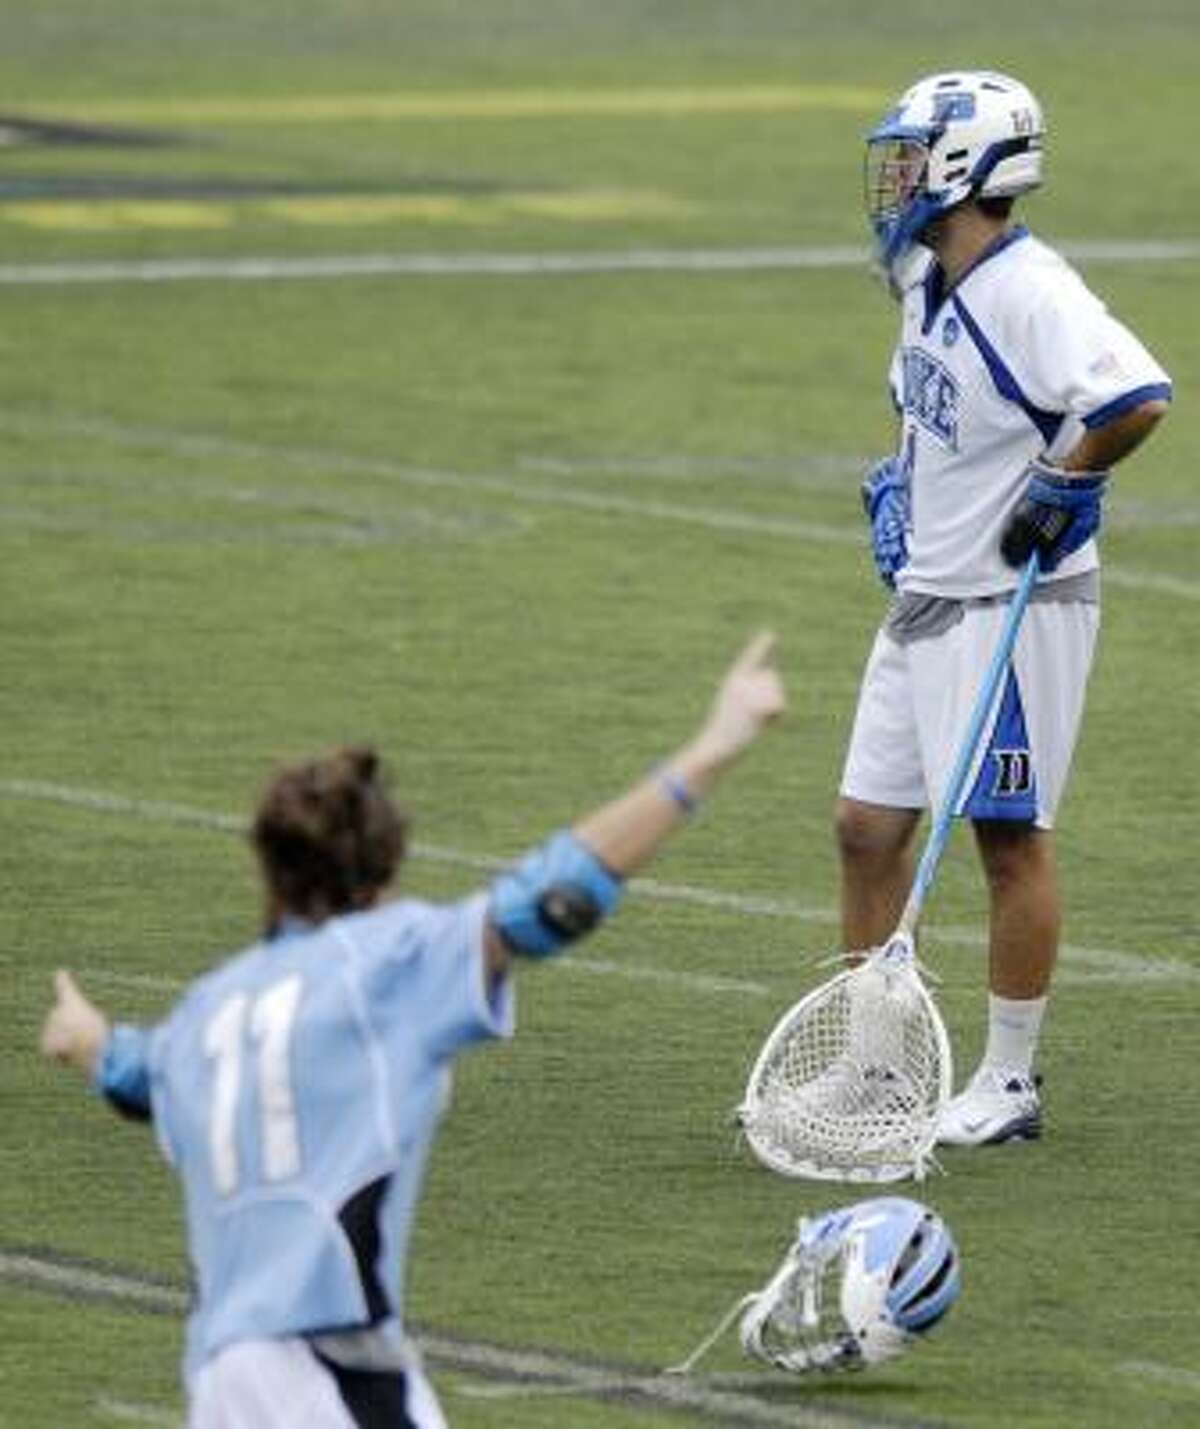 Johns Hopkins spoiled Duke's happy ending, beating the Blue Devils 12-11 to capture the NCAA men's lacrosse championship.